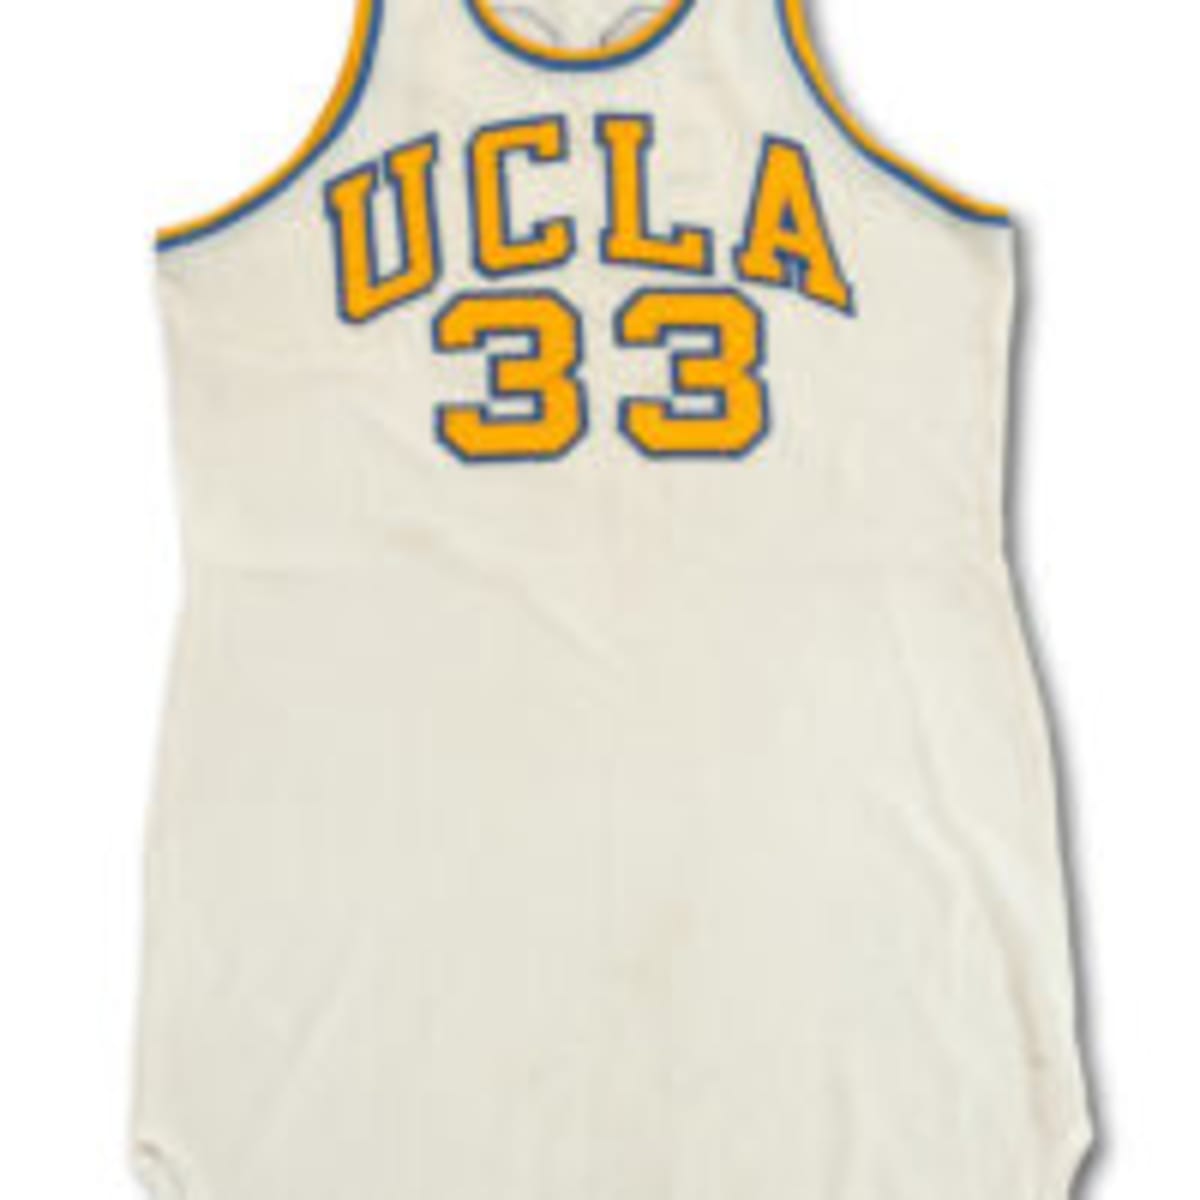 mens renere Ruckus Lew Alcindor UCLA game worn jersey sets new collegiate record - Sports  Collectors Digest